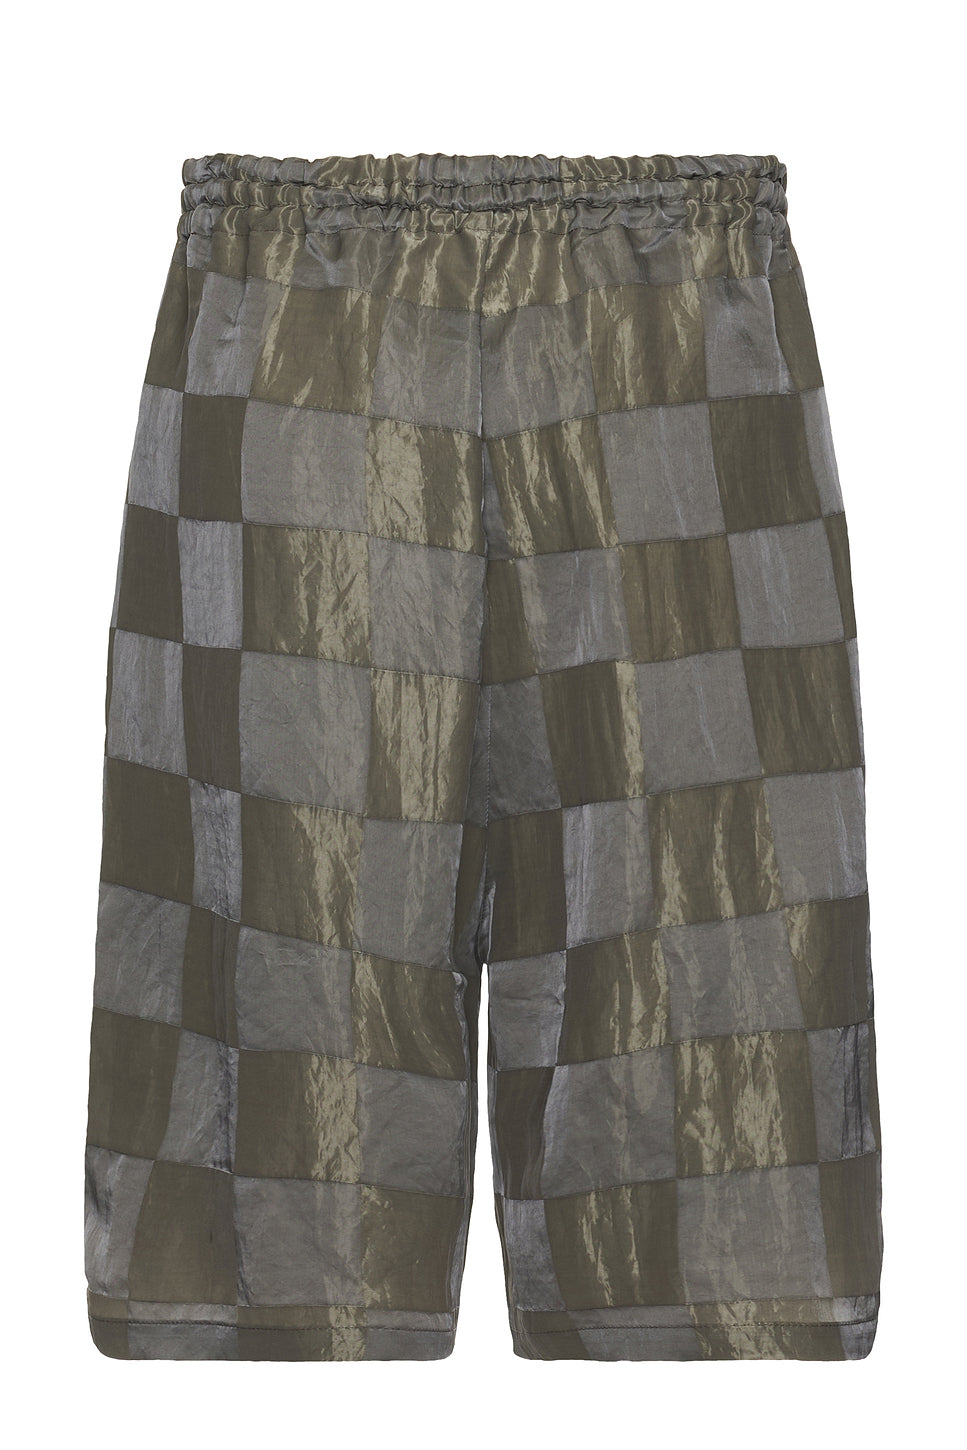 H.d.p. Bright Cloth Checker Shorts